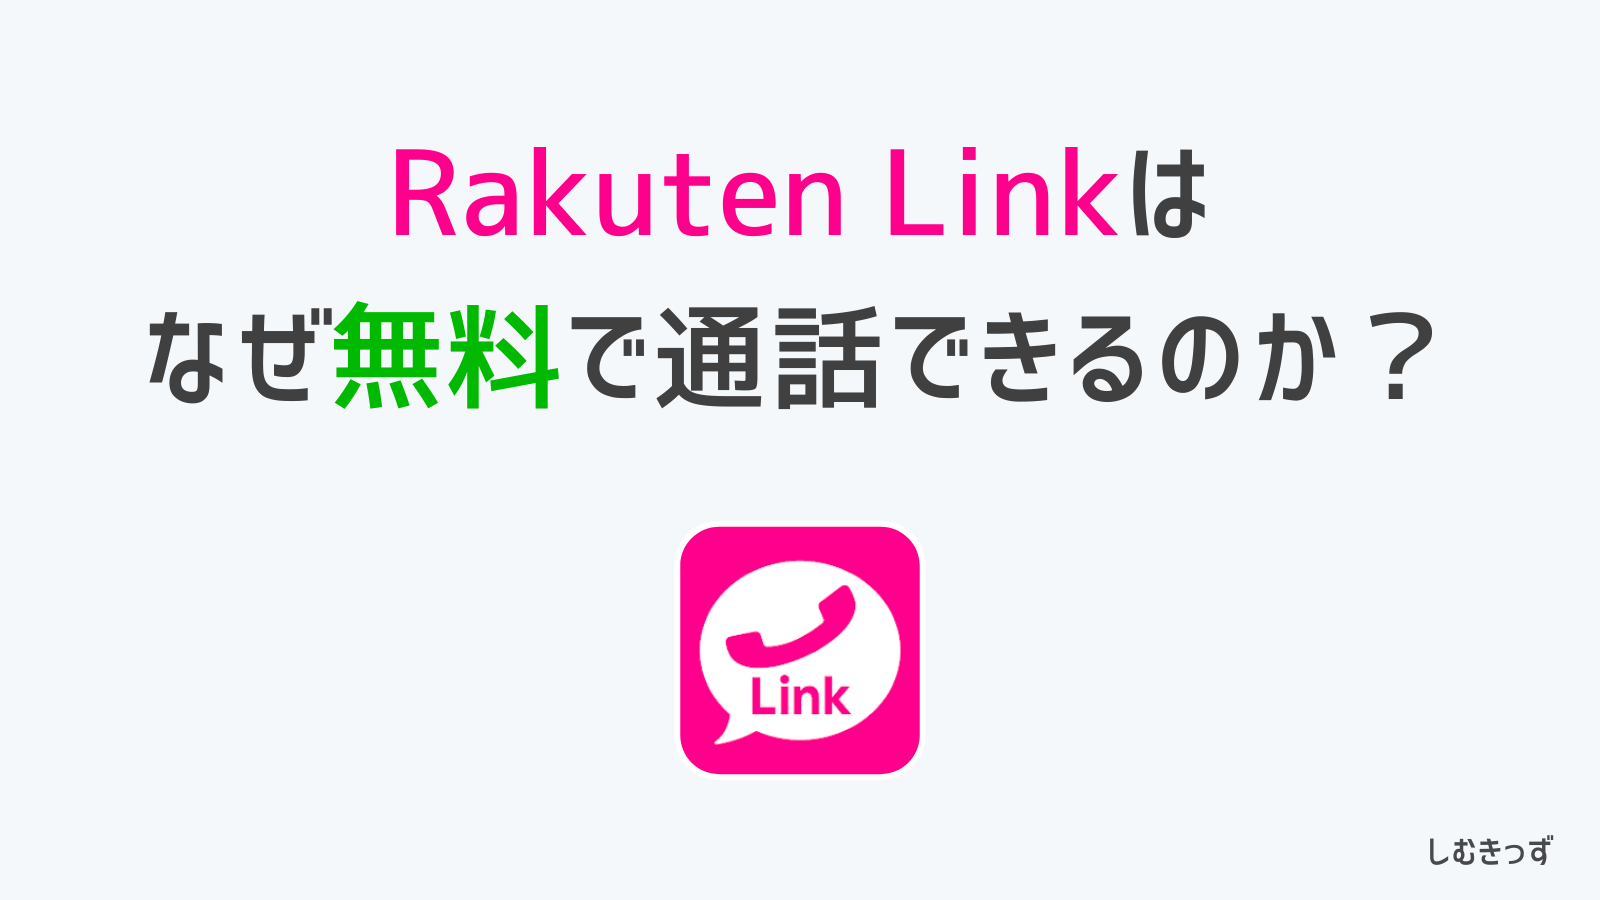 Rakuten Linkはなぜ通話料無料で通話できるのか？その仕組みを解説します。